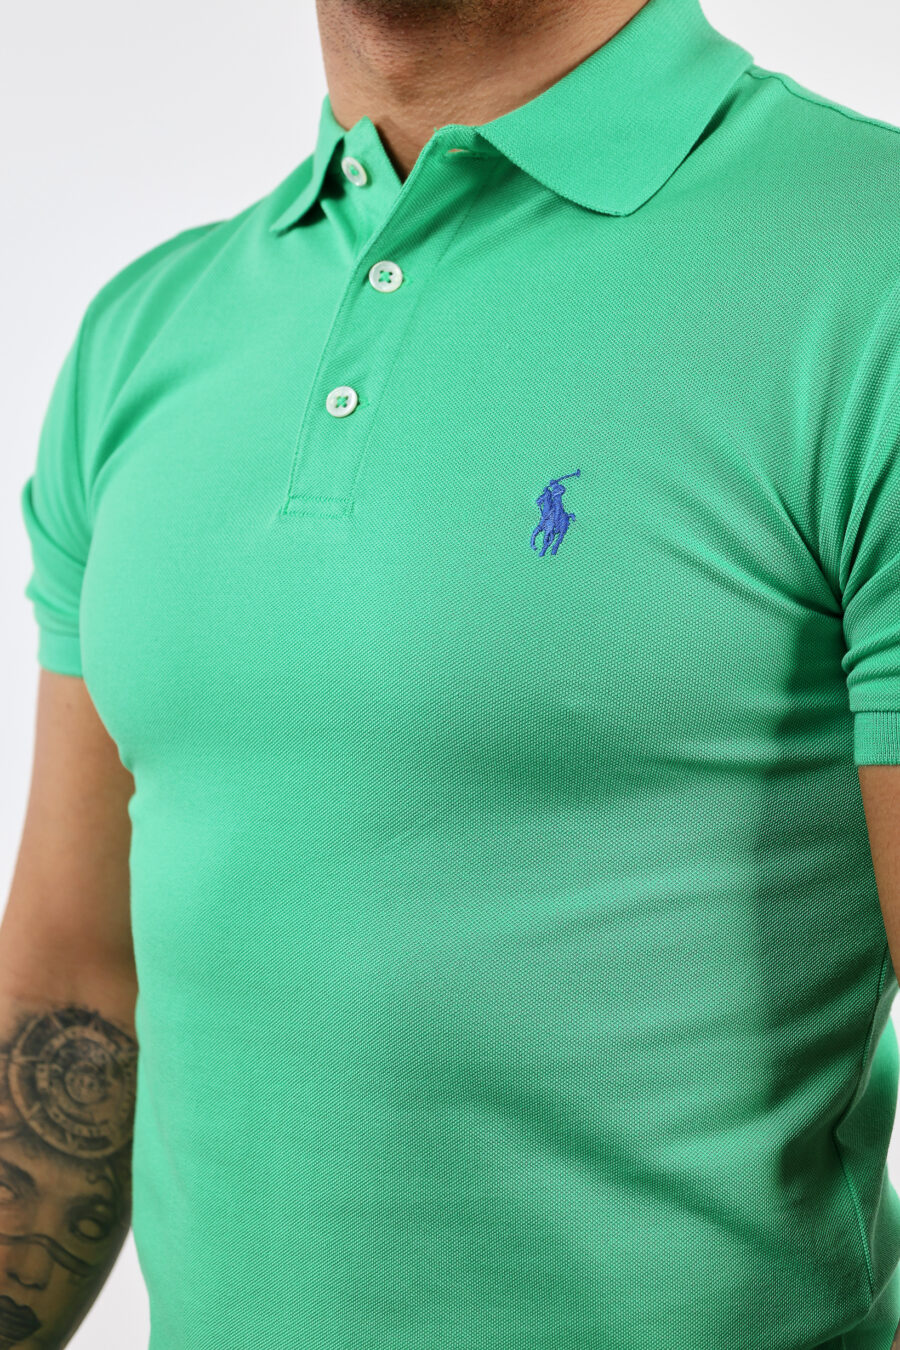 Camiseta verde y azul con minilogo "polo" - BLS Fashion 174